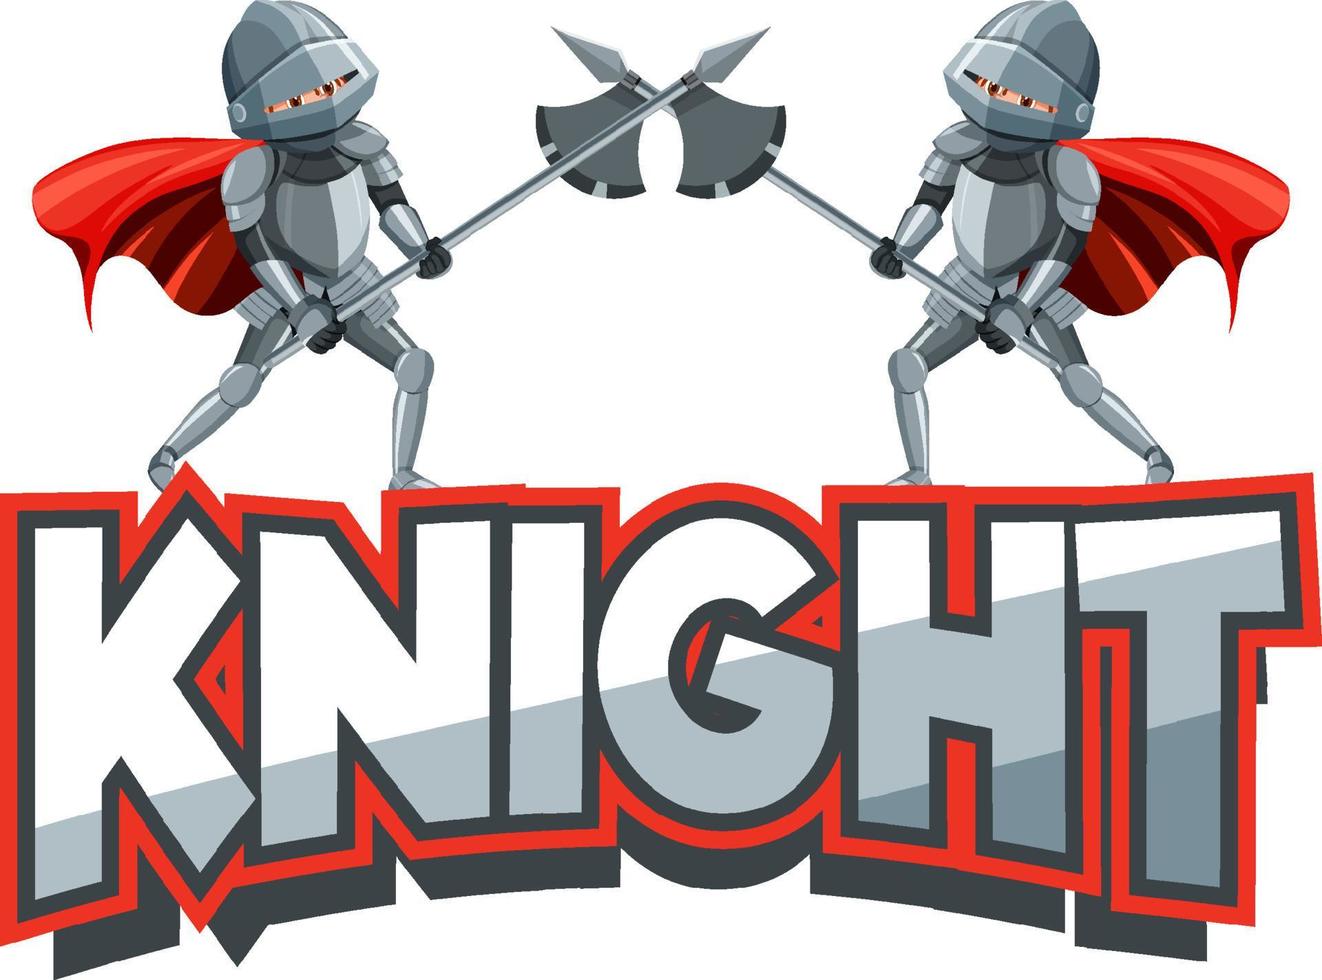 Medievil knight logo on white background vector